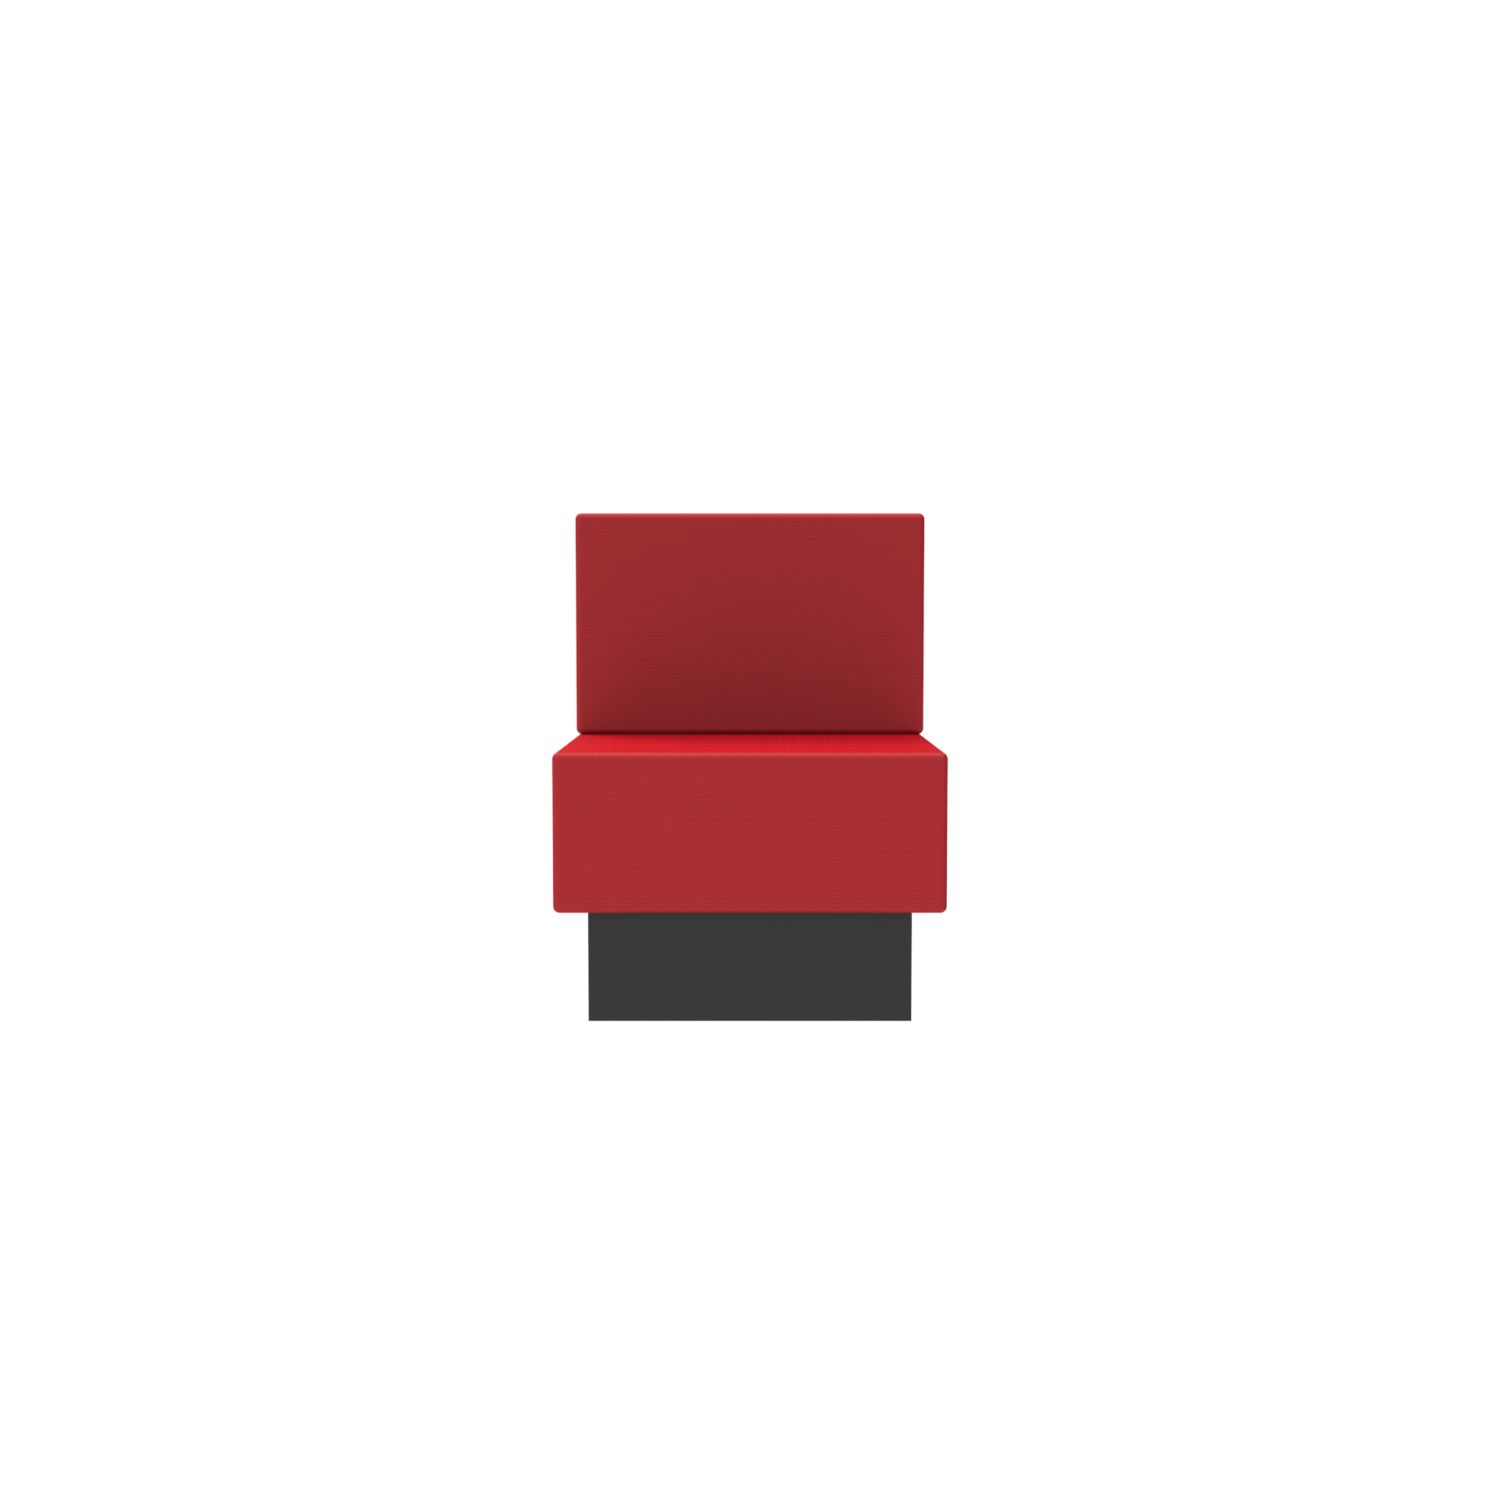 lensvelt oma blocks relaxing edition closed base with backrest full length 60 cm width grenada red 010 black ral9005 hard leg ends